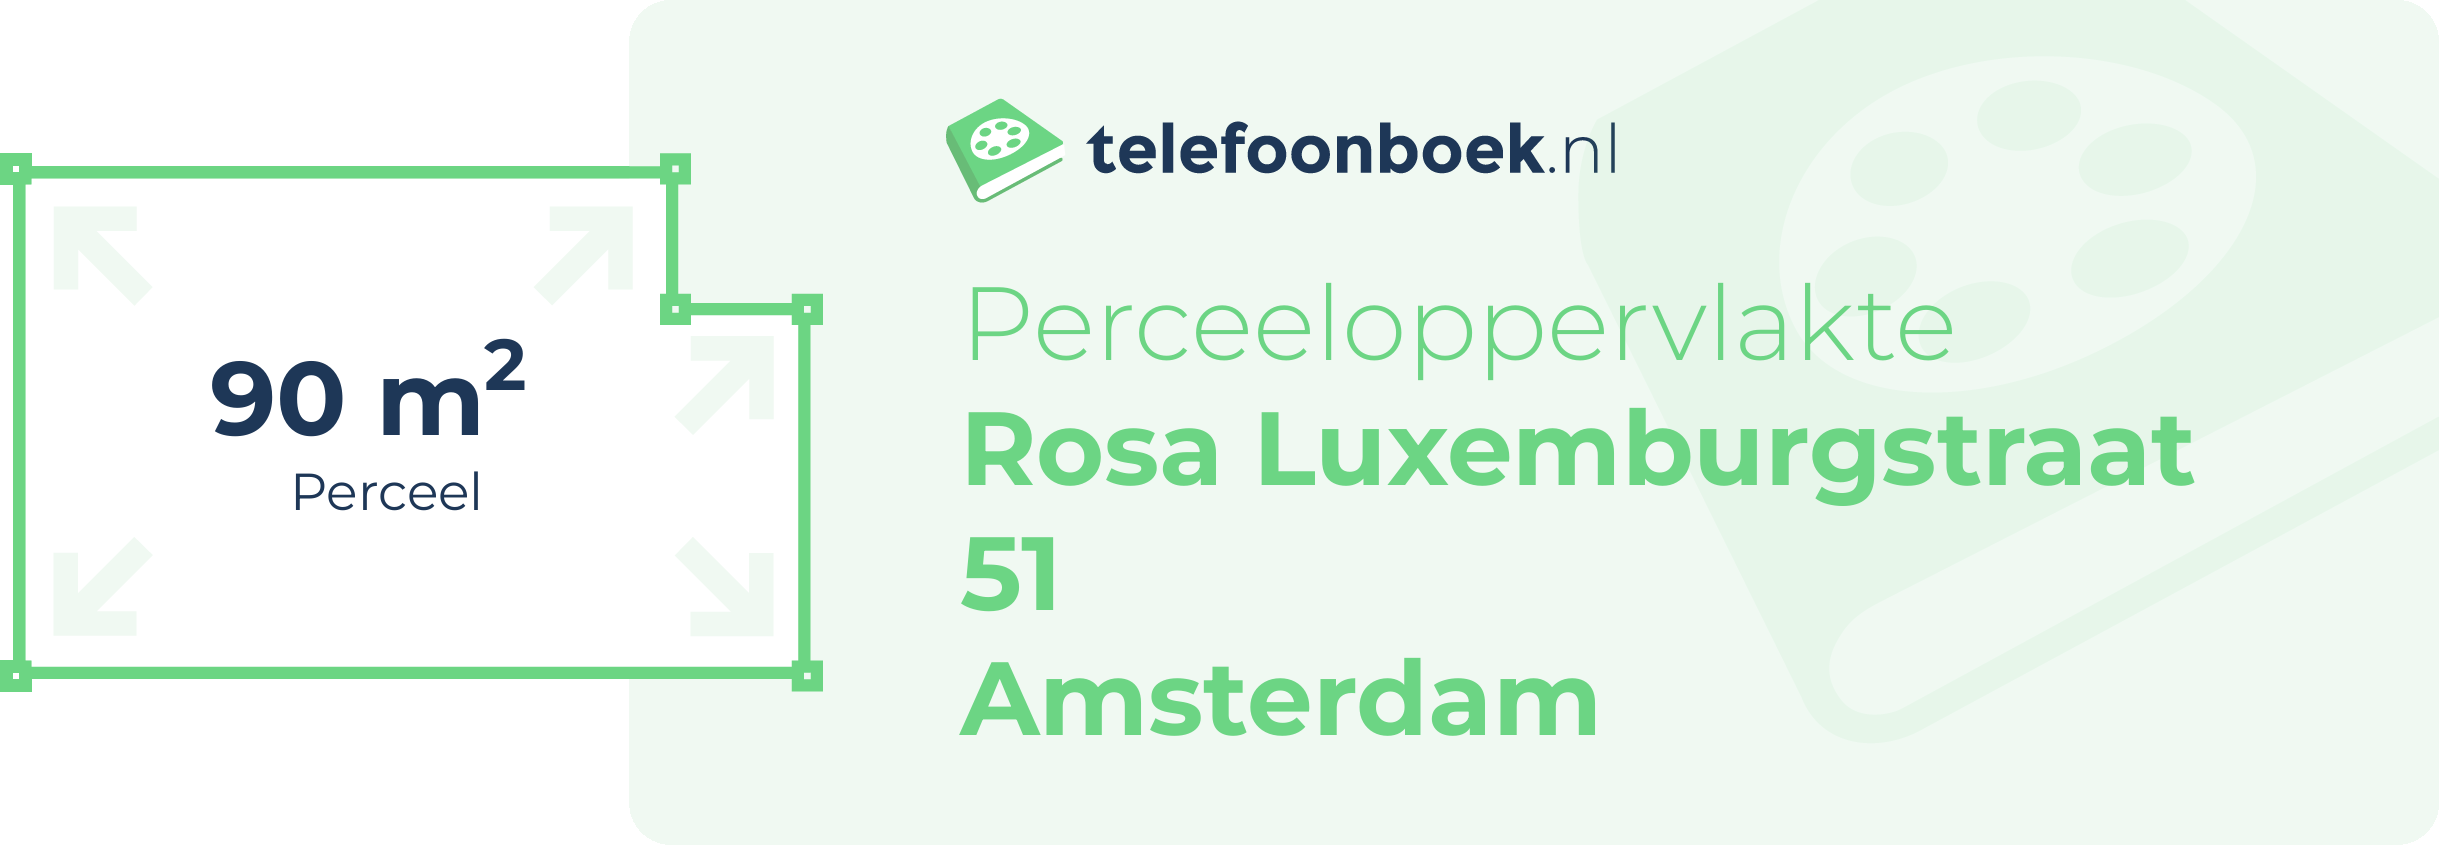 Perceeloppervlakte Rosa Luxemburgstraat 51 Amsterdam